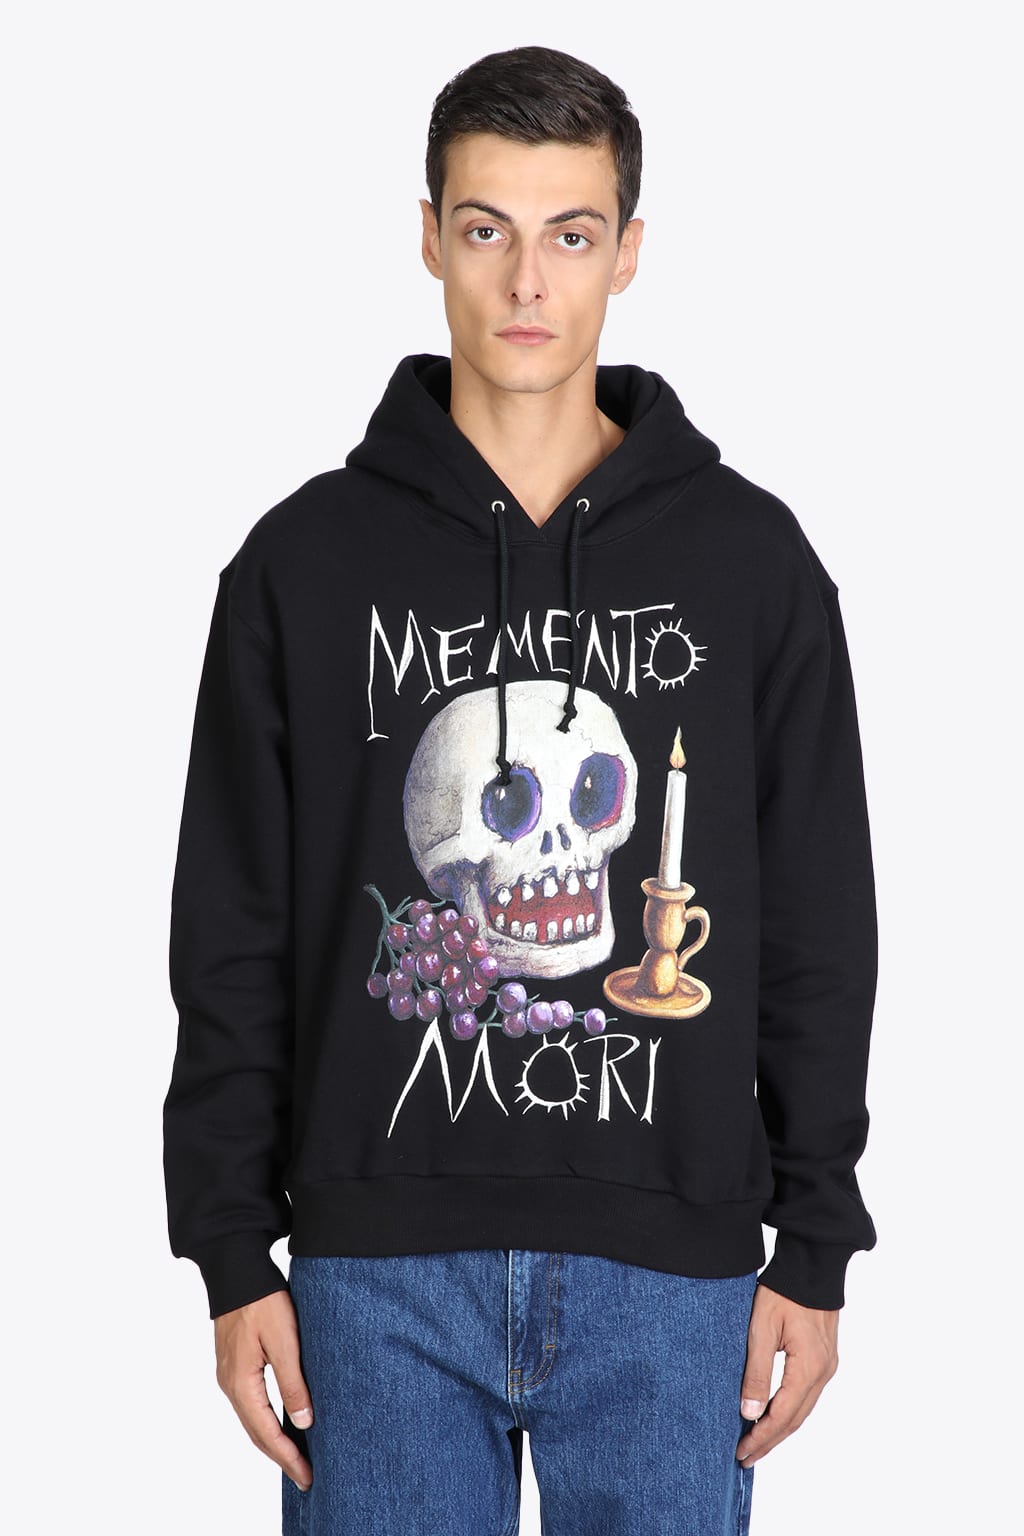 Endless Joy Heavyweight Cotton Hoodie With Front Print Black cotton hoodie with front print - Momento Mori hoodie